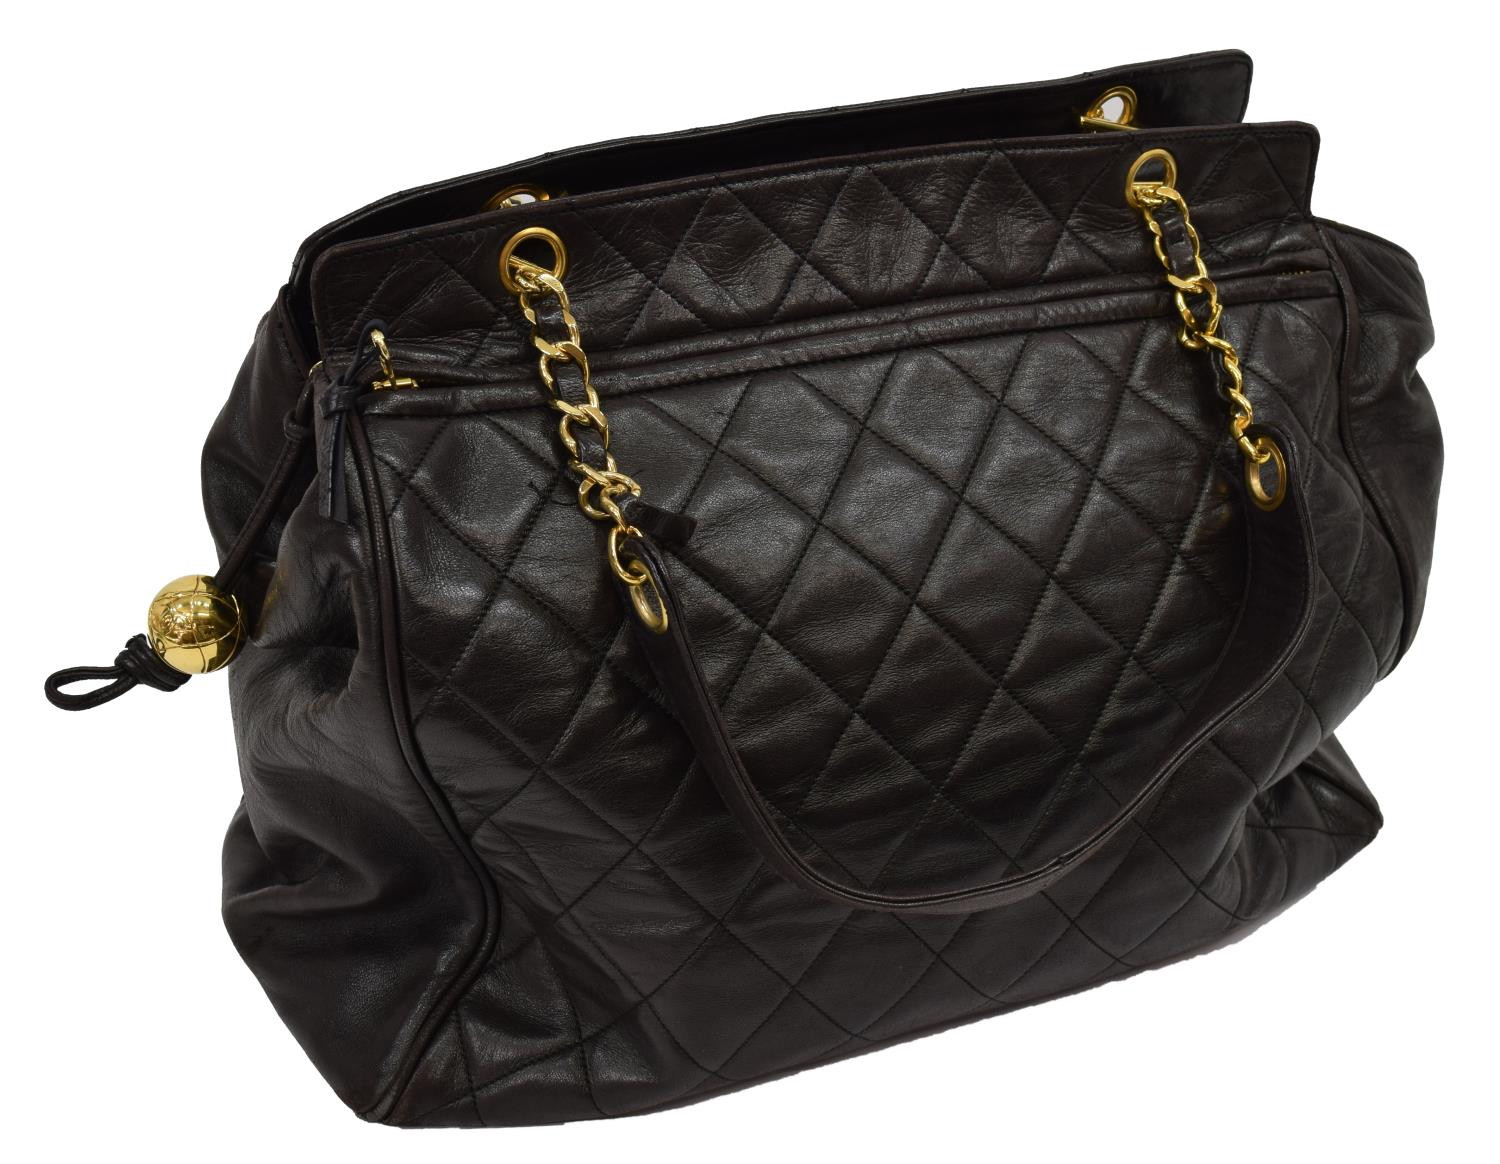 Chanel Brown Quilted Leather Shoulder Bag - Holidays  Chanel Advent Calendar Dust Bag